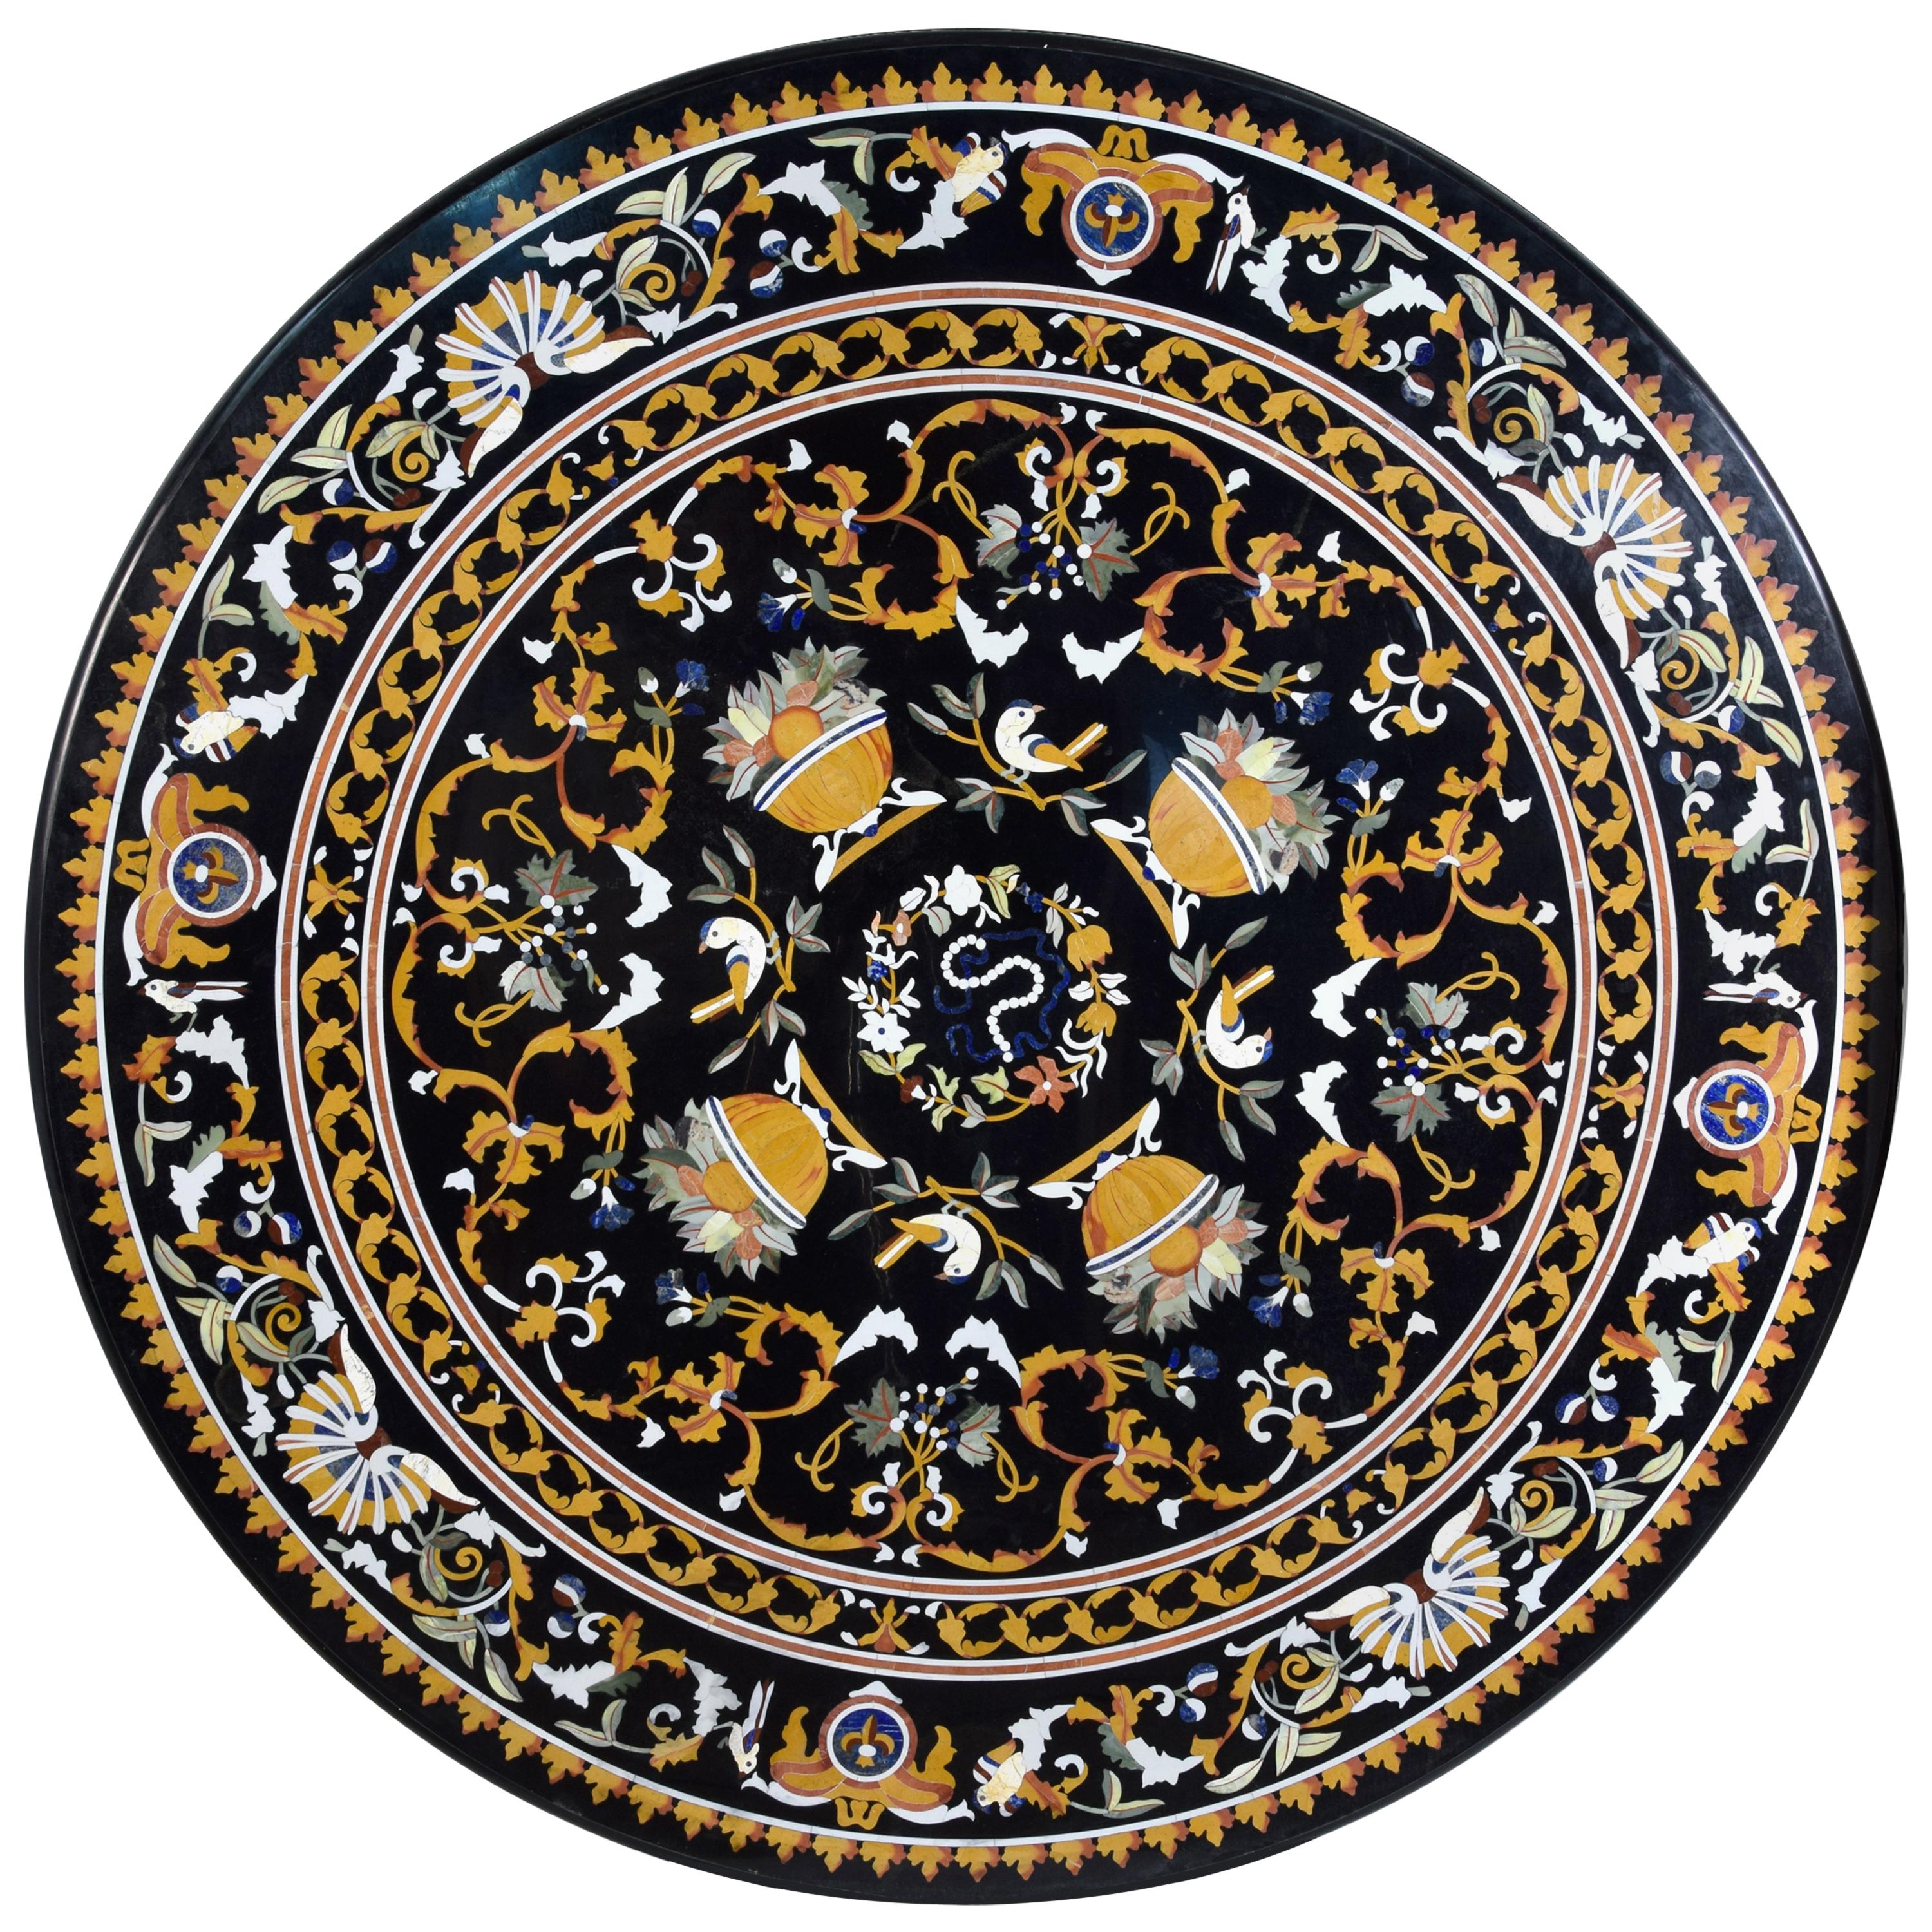 Circular "Pietra Dura" Tabletop, Marble and Hardstones For Sale